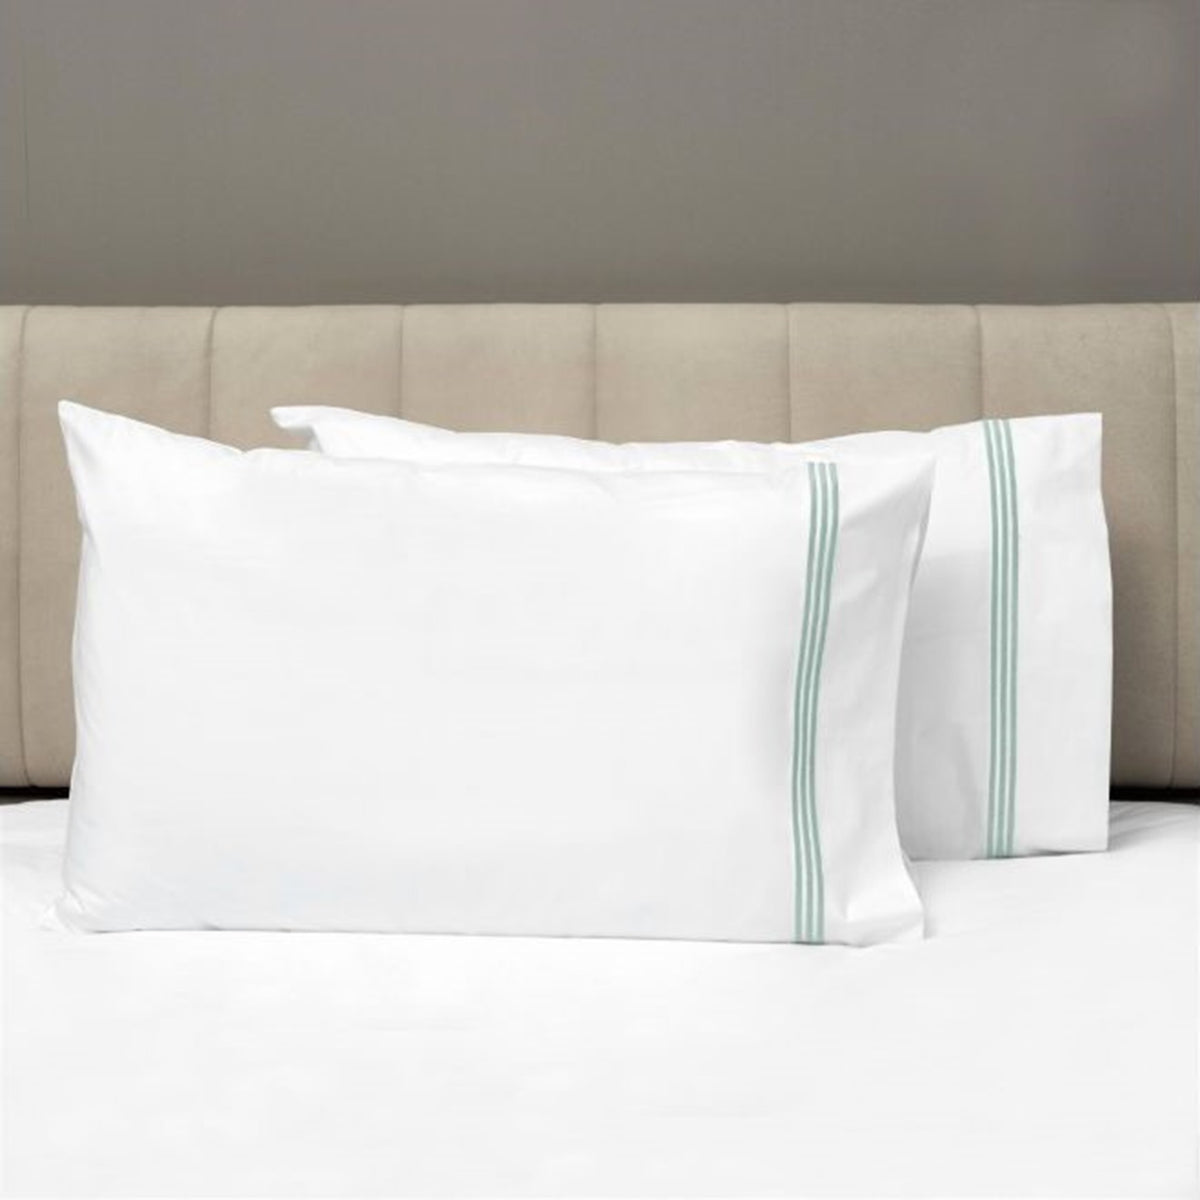 Pair of Pillowcases of Signoria Platinum Percale Bedding in White/Silver Sage Color